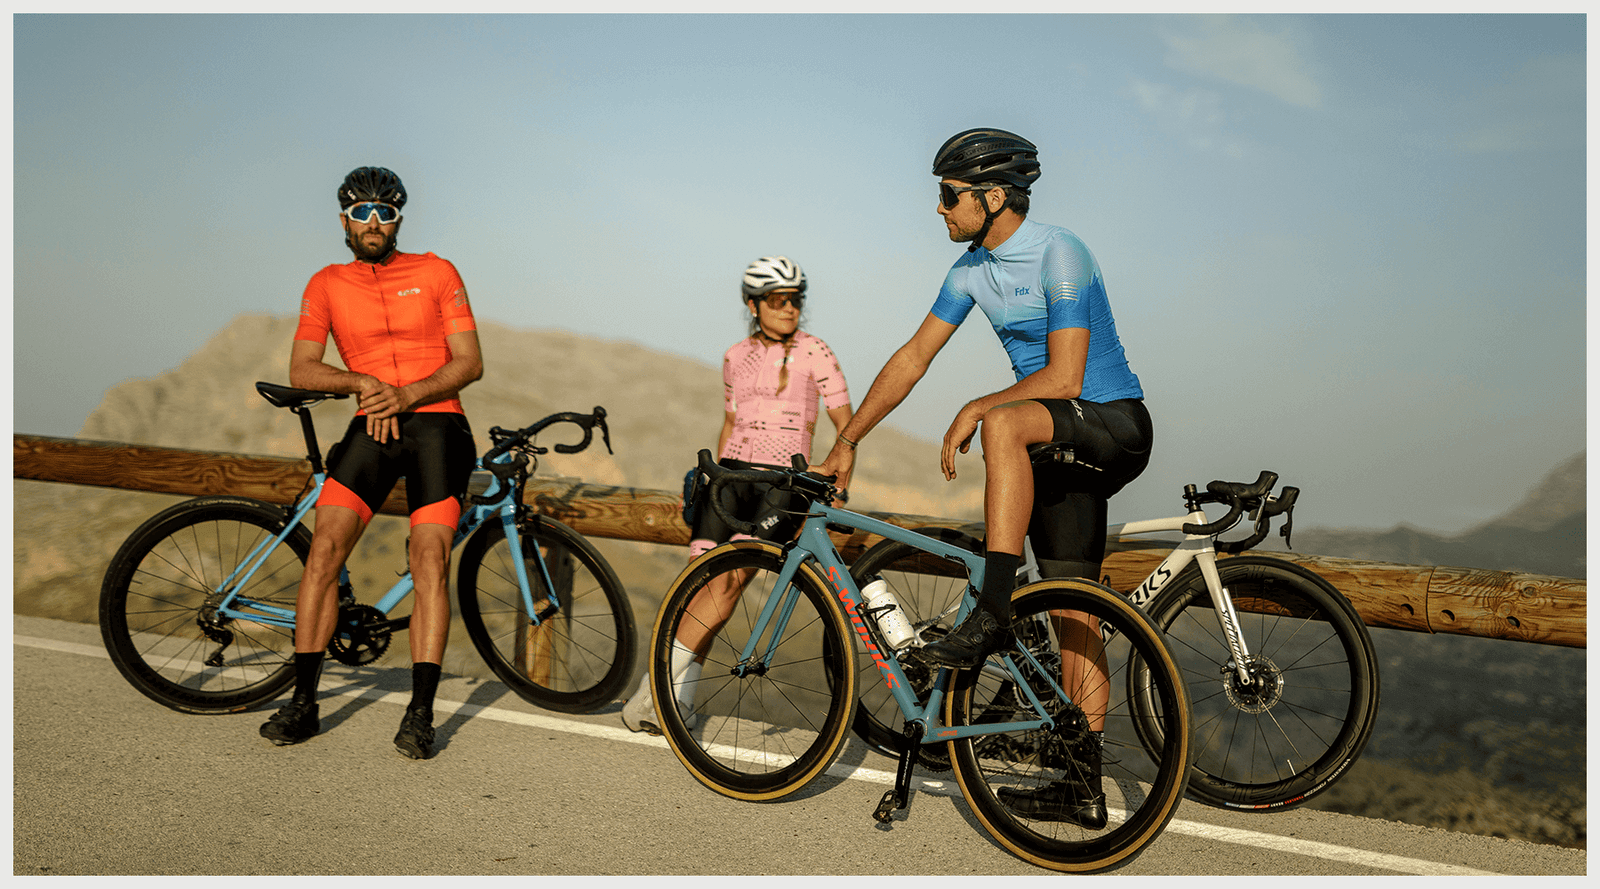 Fdx Half Sleeve Cycling Jersey & Gel Padded Bib Shorts for Mens Pink & Maroon Best Summer Road Bike Wear Light Weight, Hi-viz Reflectors & Pockets - Duo